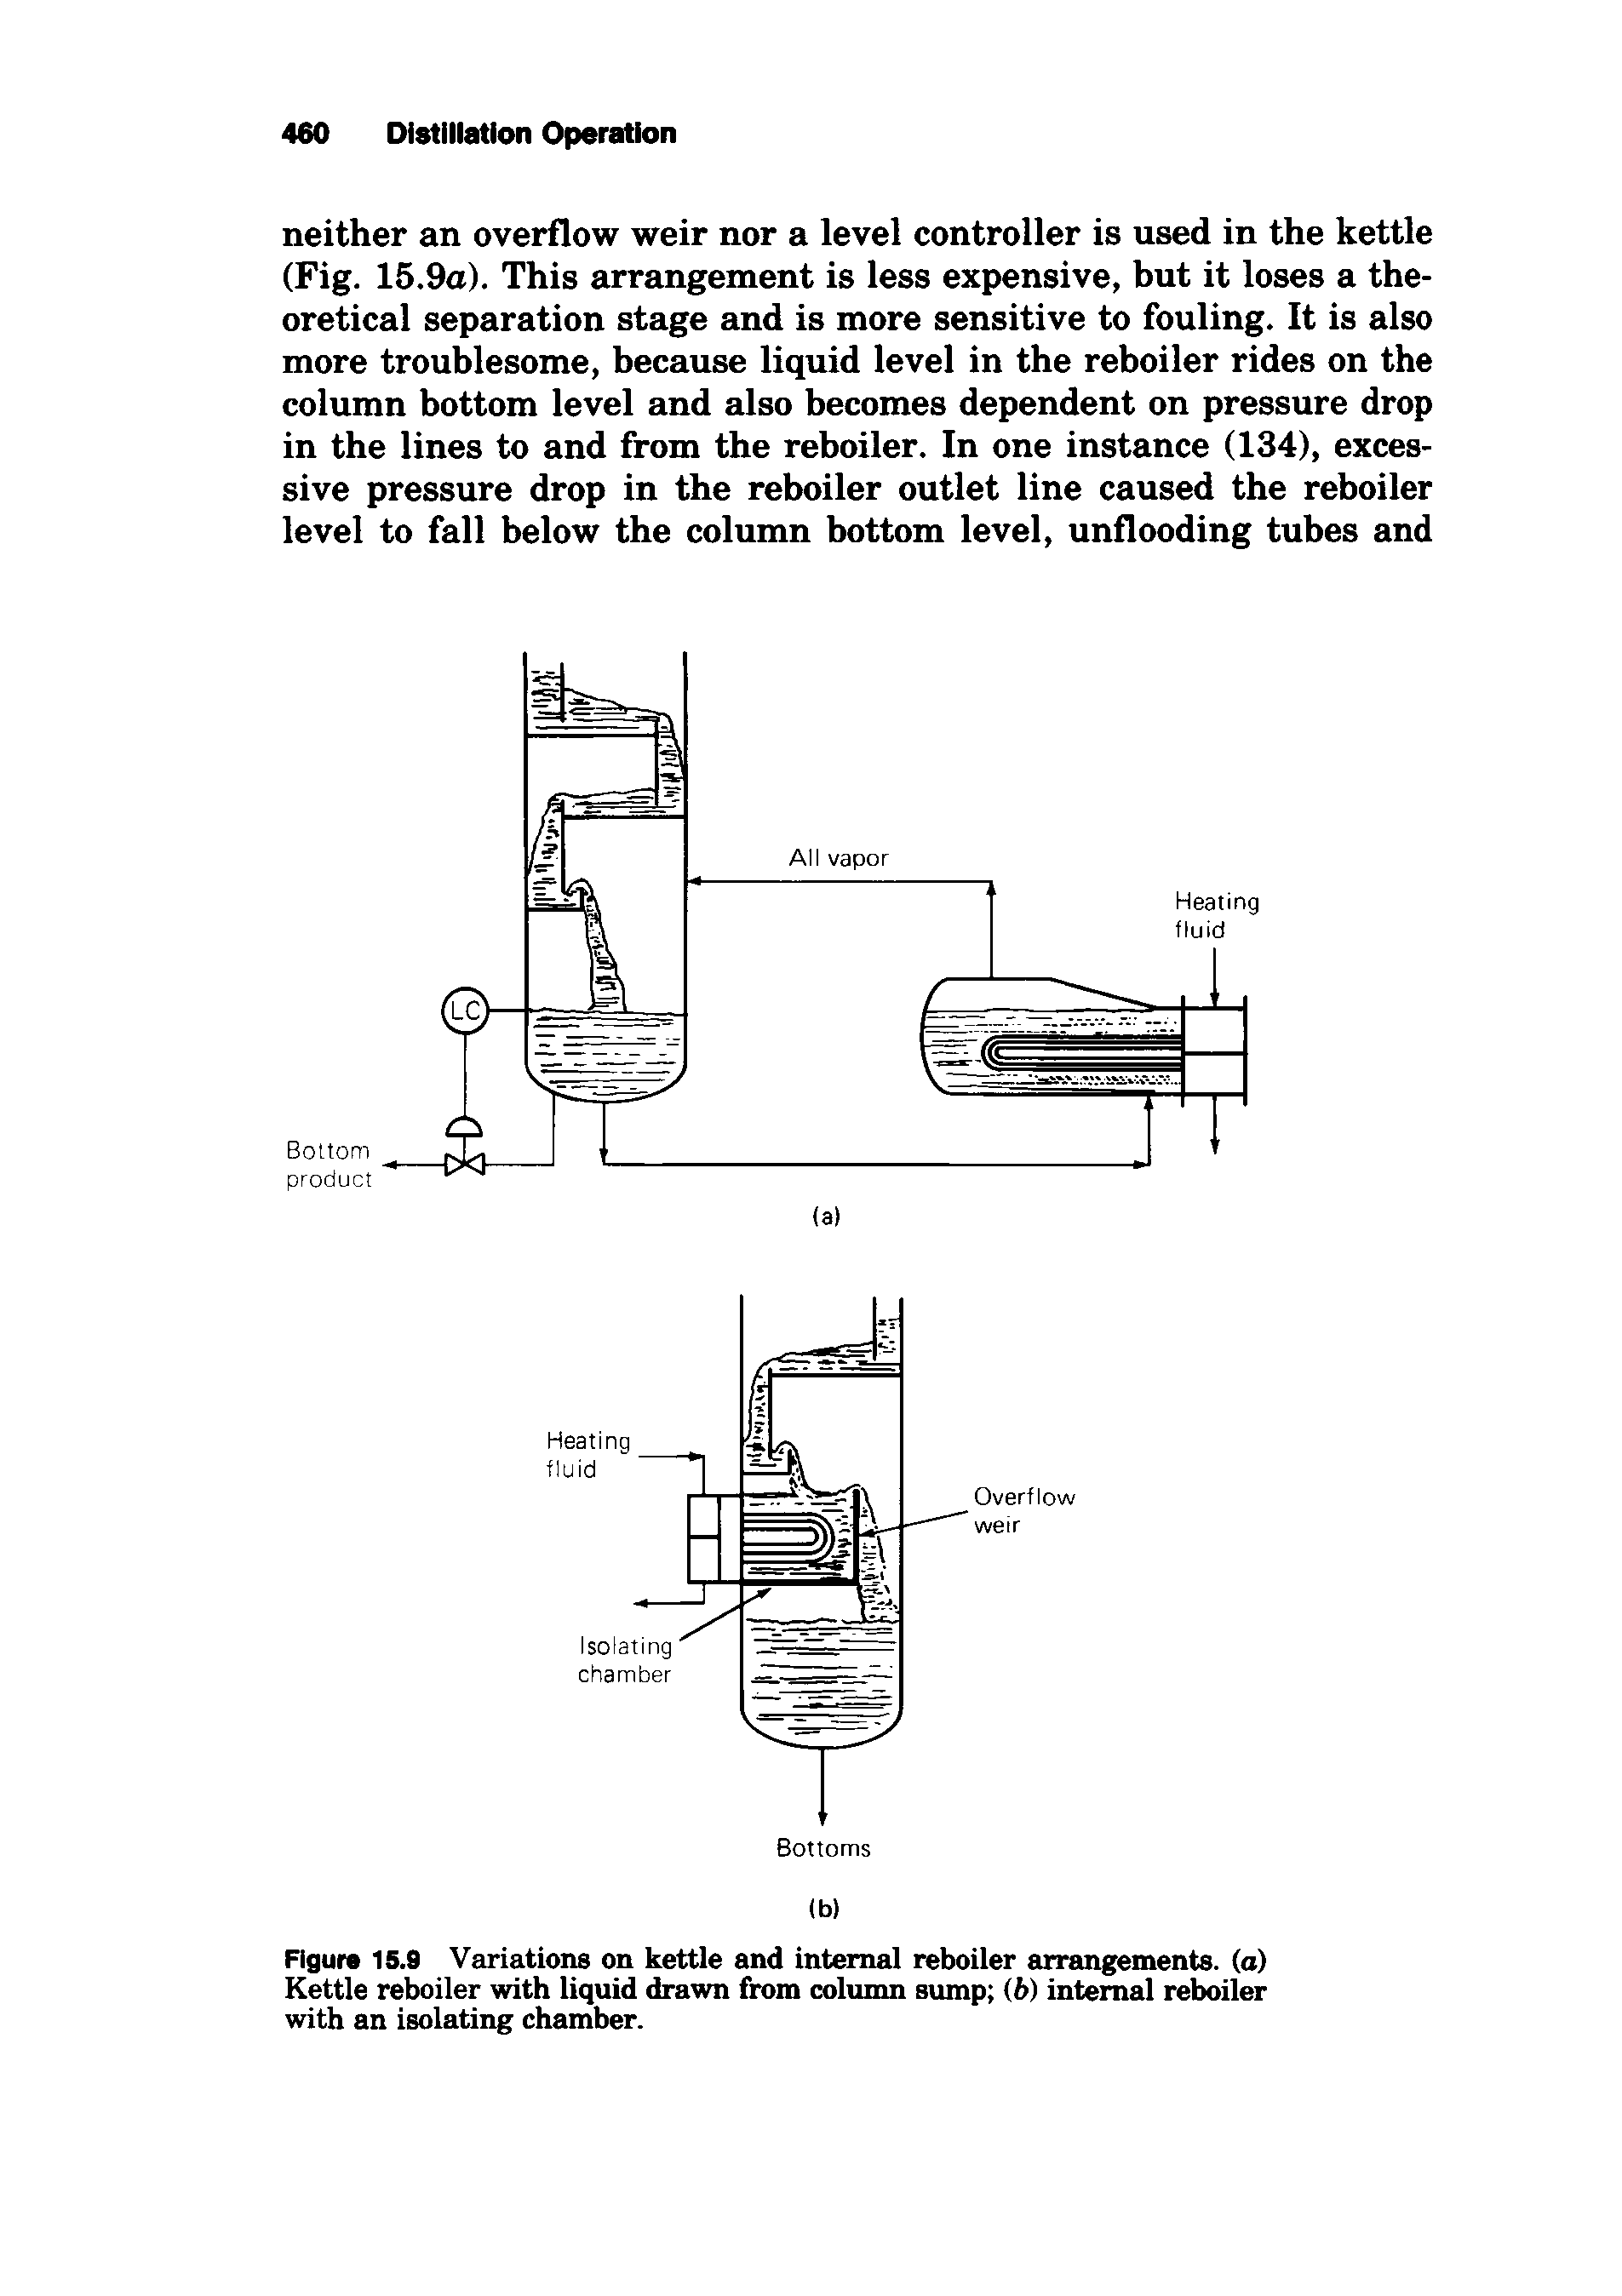 Figure 15.9 Variations on kettle and internal reboiler arrangements, (a) Kettle reboiler with liquid drawn from column sump (6) internal reboiler with an isolating chamber.